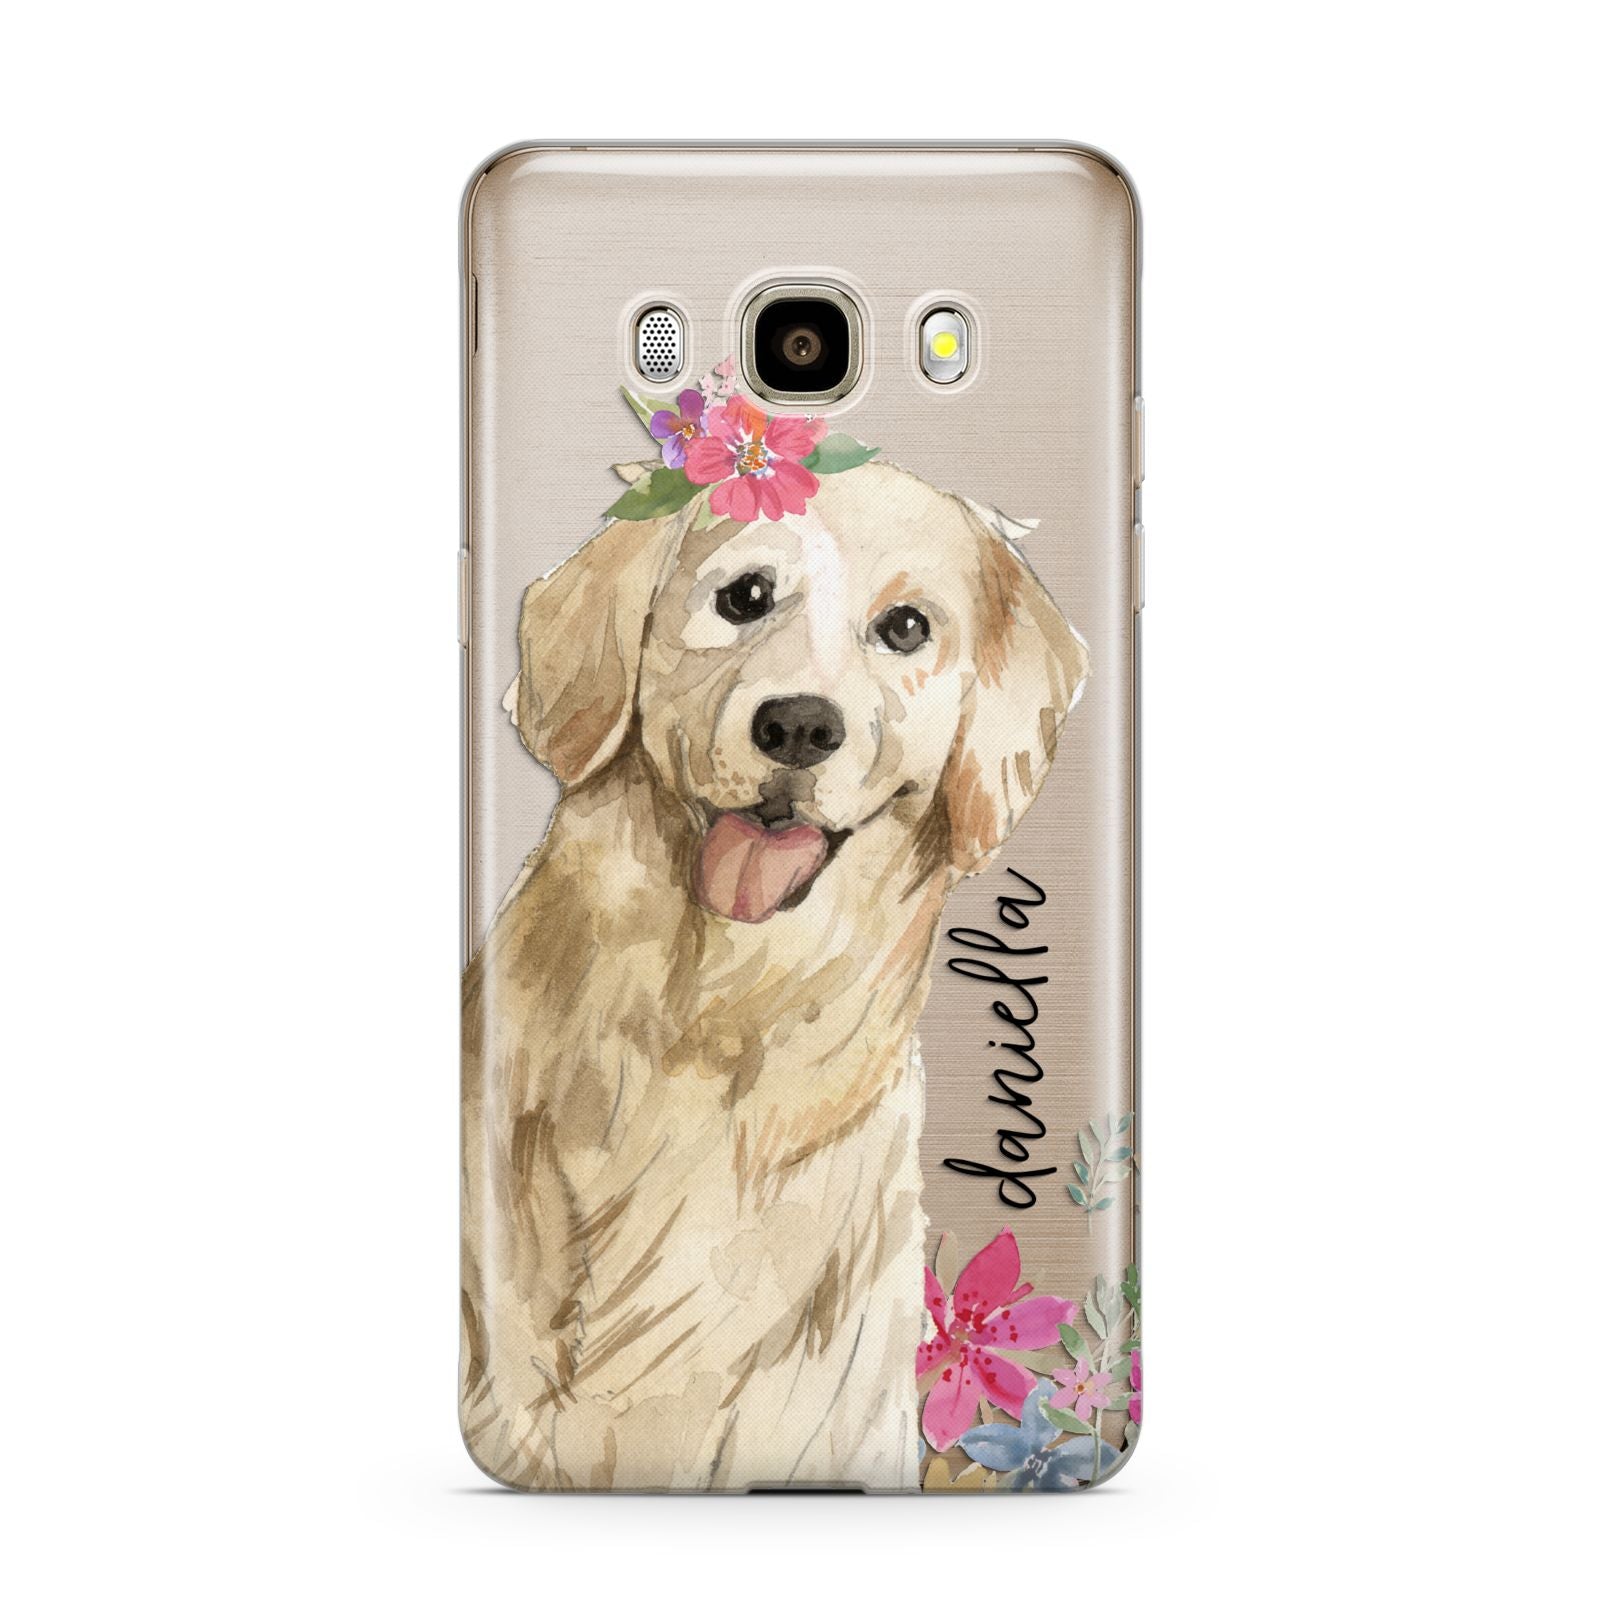 Personalised Golden Retriever Dog Samsung Galaxy J7 2016 Case on gold phone